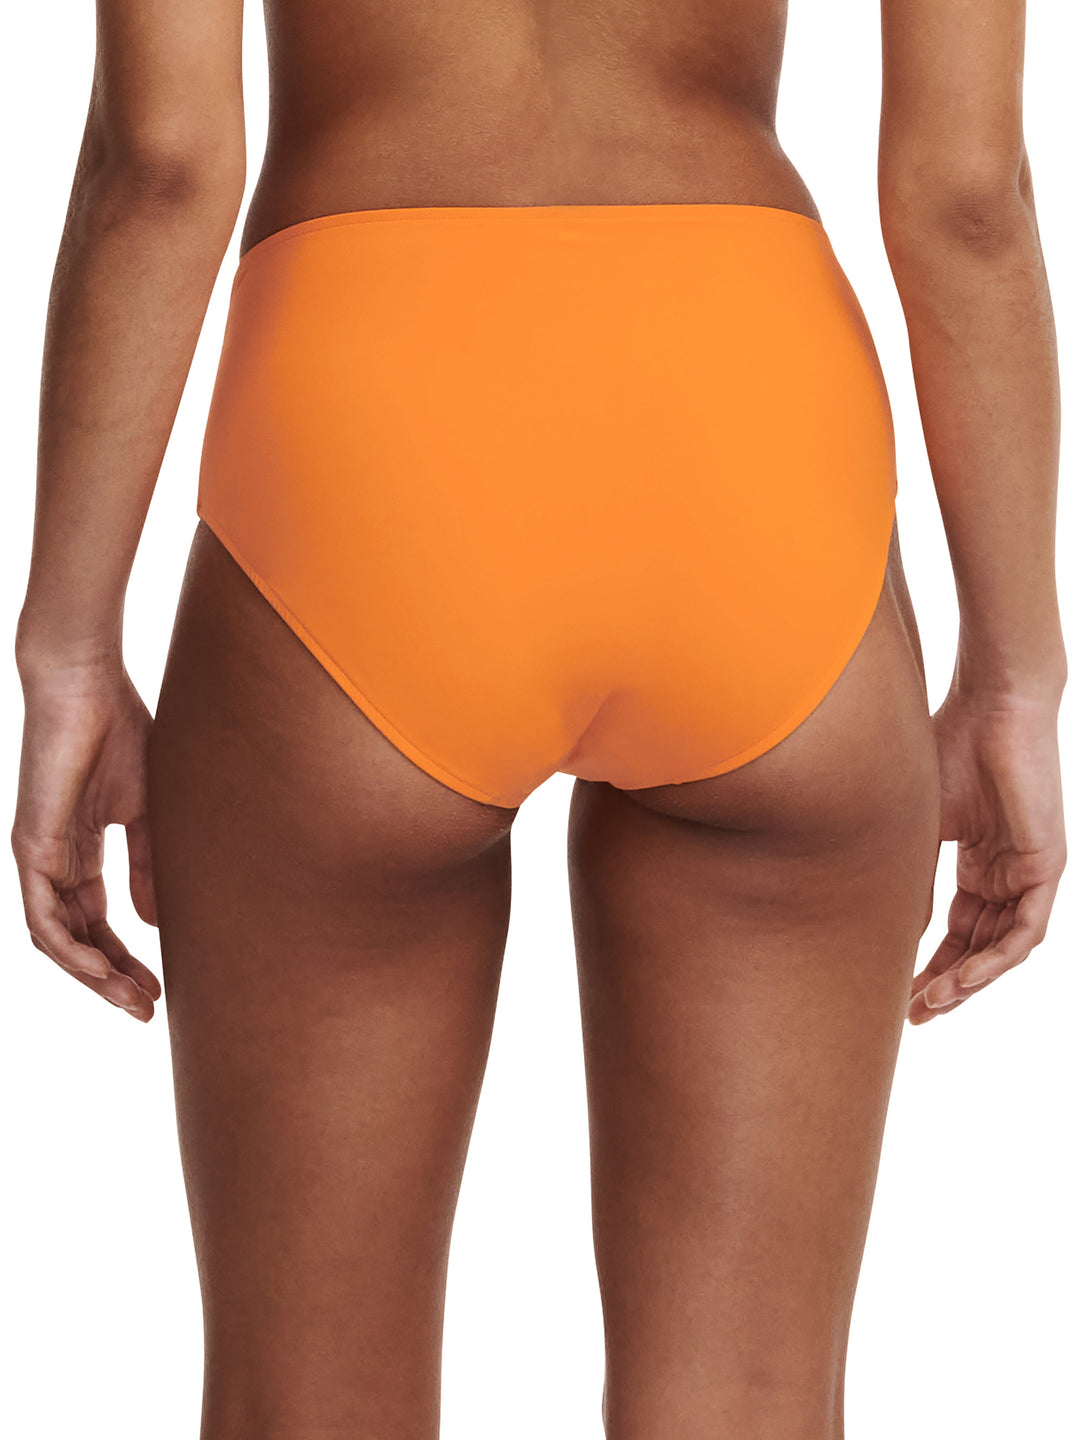 Chantelle Swimwear - Emblem Full Bikini Brief Orange Full Bikini Brief Chantelle Swimwear 